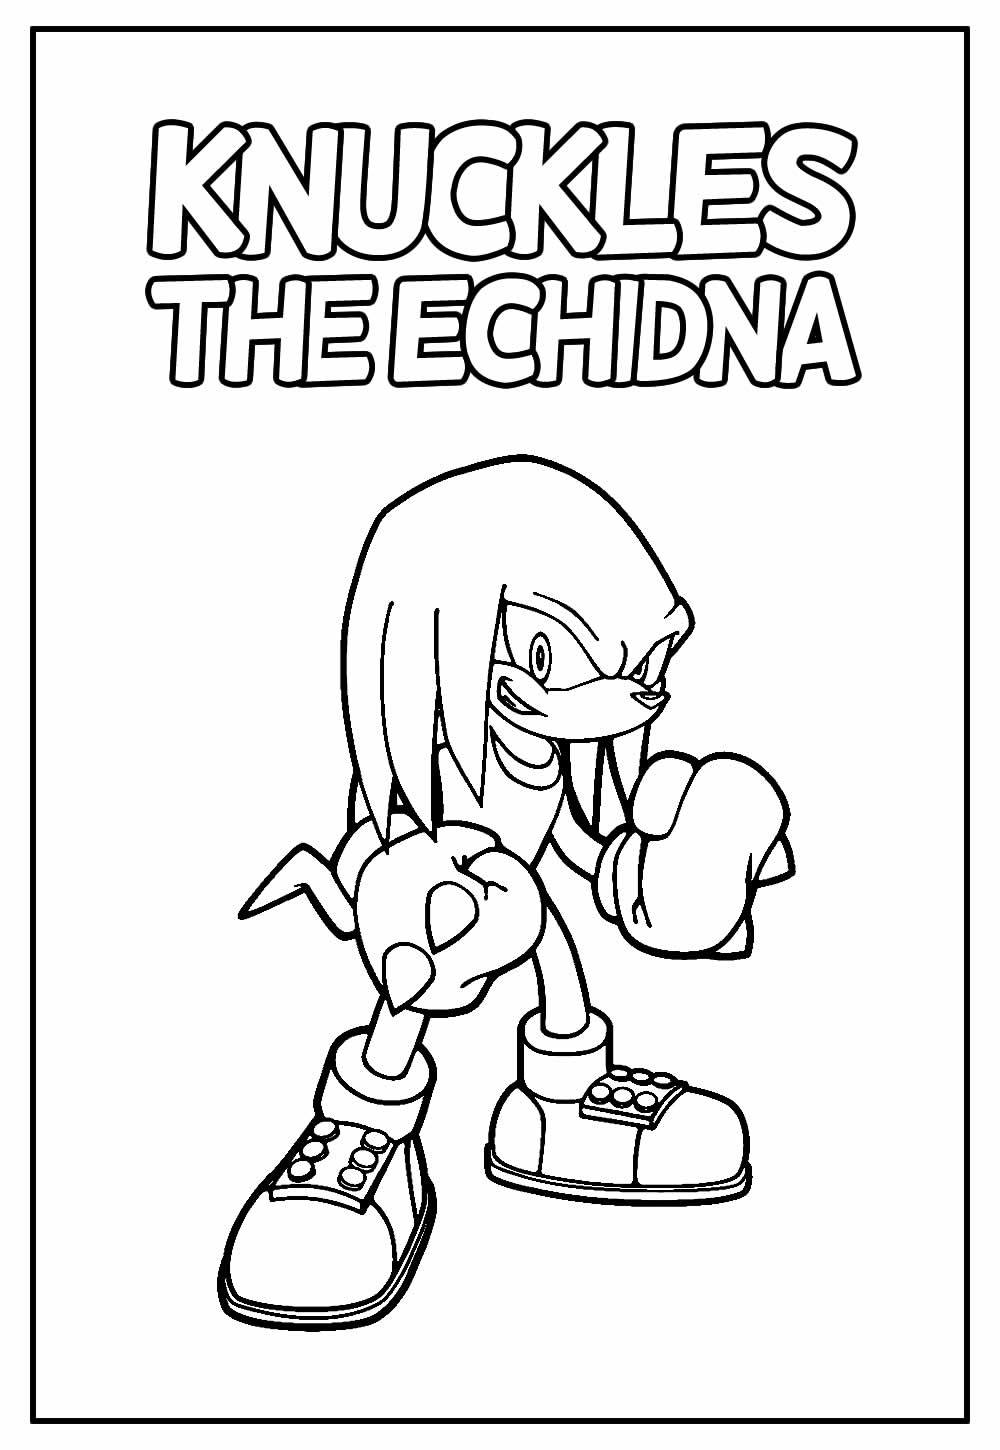 Desenhos para Pintar Sonic 2